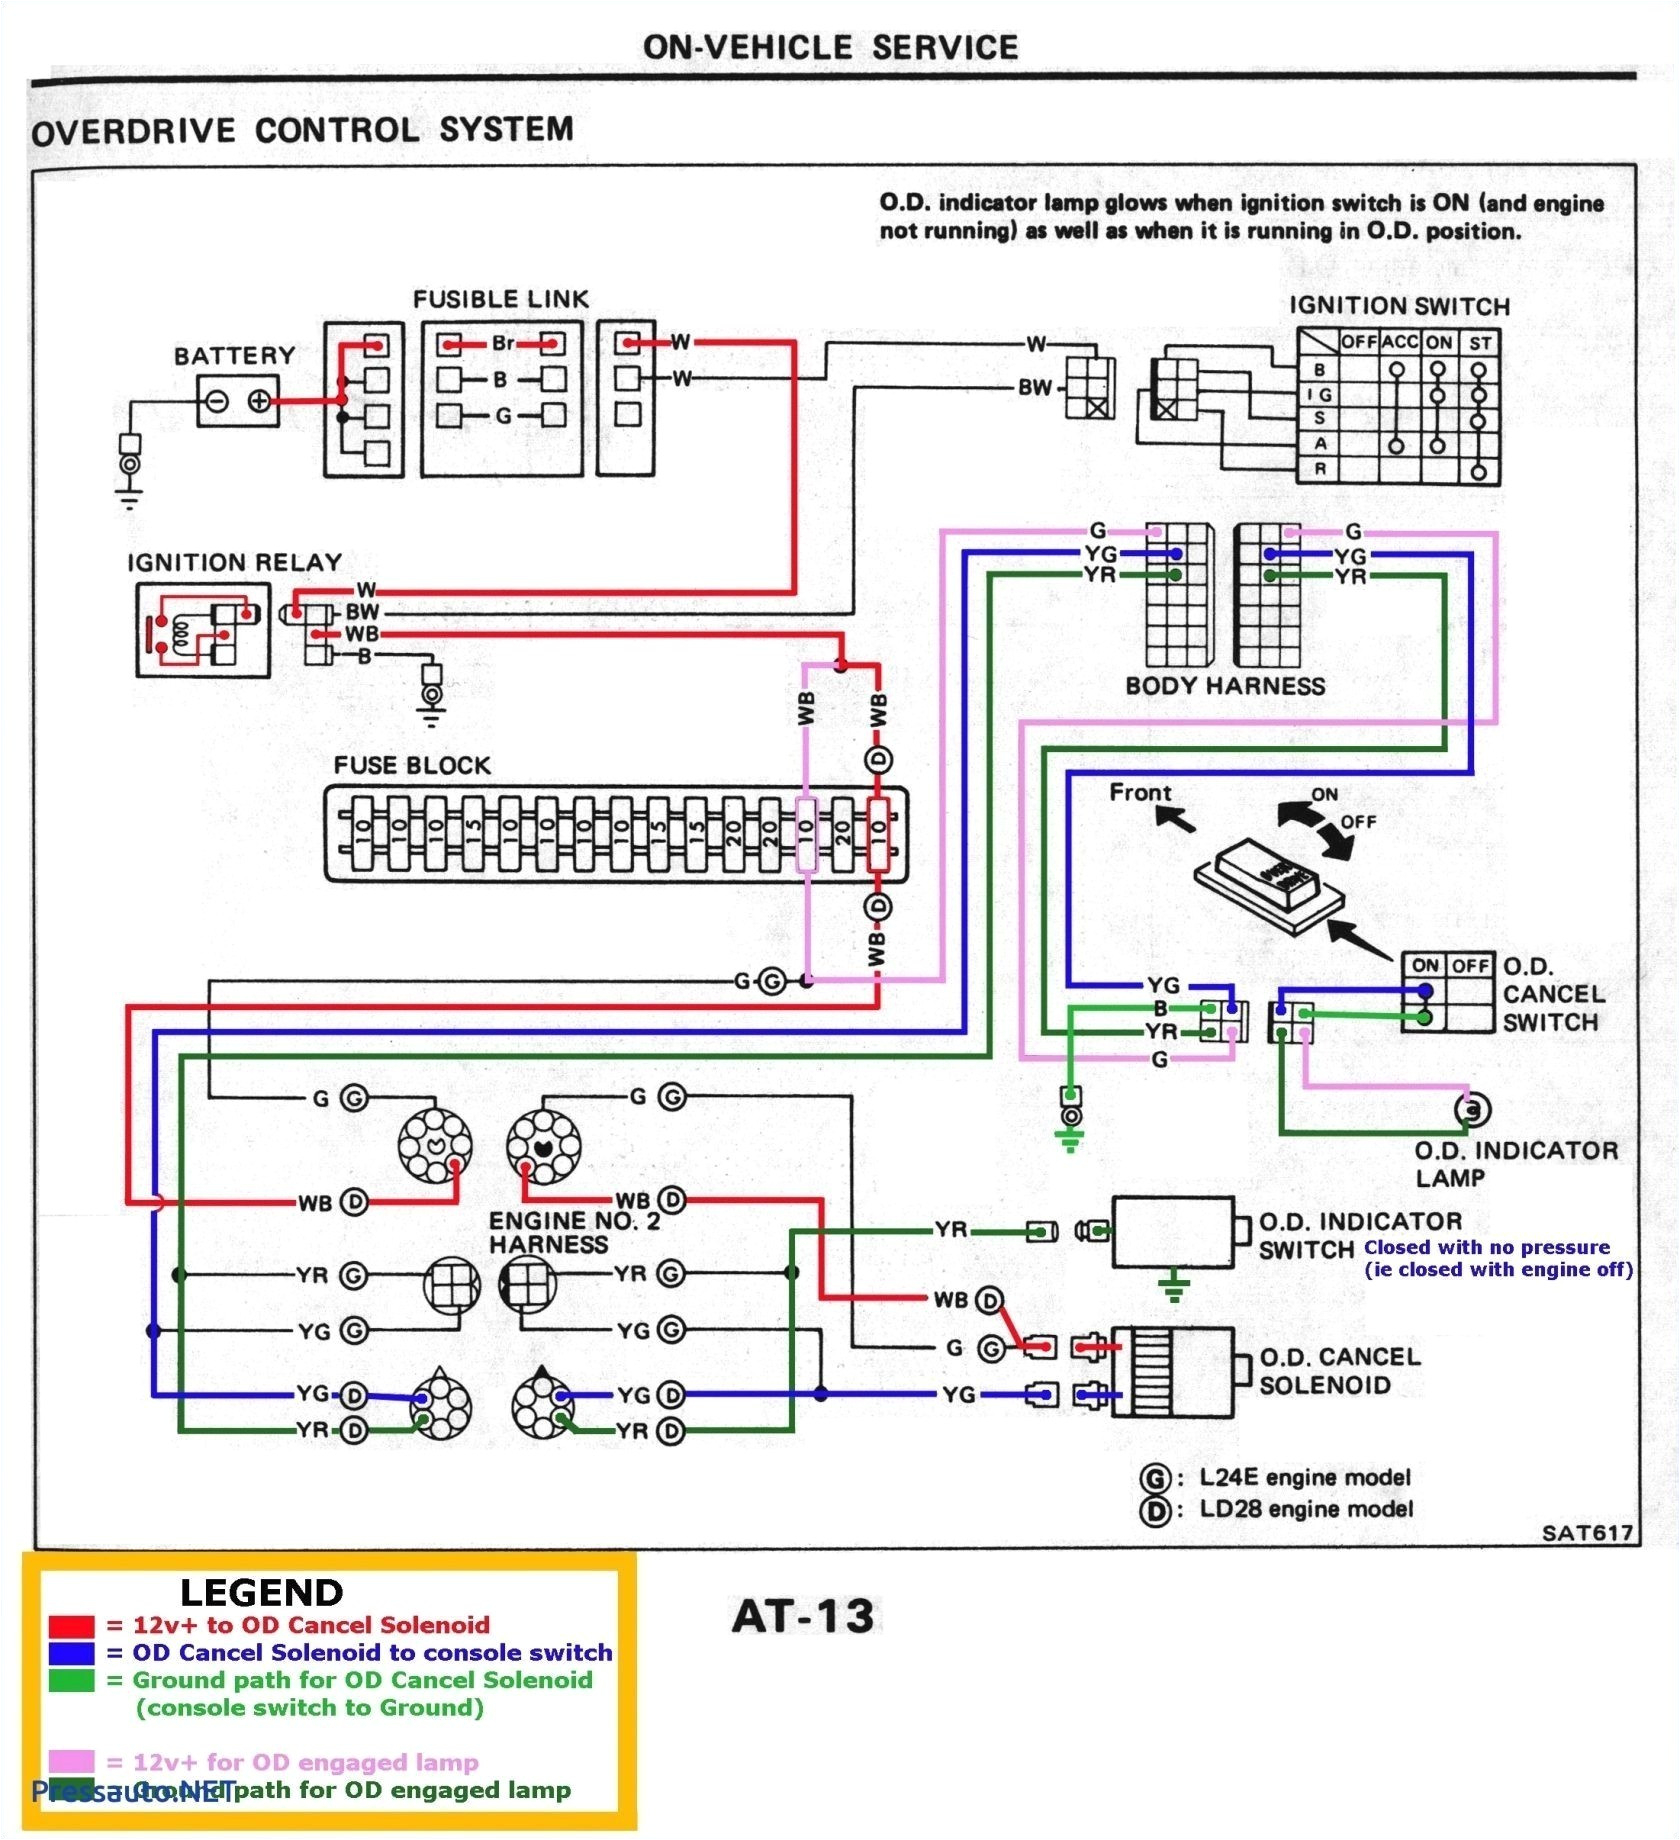 network wiring diagram unique ethernet coupler wiring diagram unique ethernet cable wiring diagram image of 56